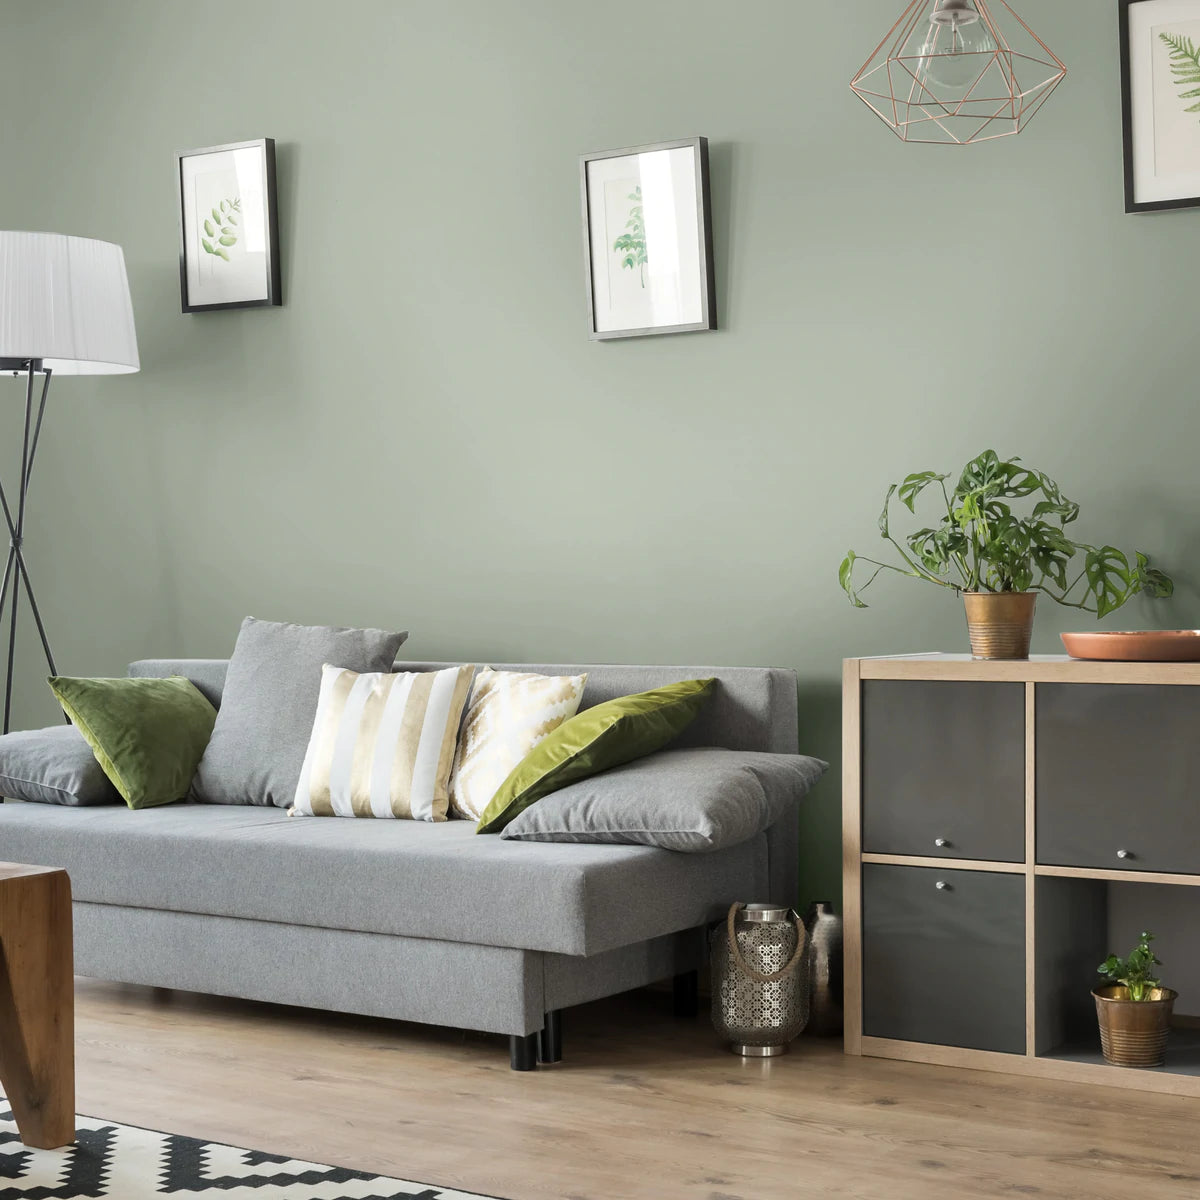 Schoolroom Green by Colourtrend Paints - Sage Green Living Room Paint Colour - Paint Online 